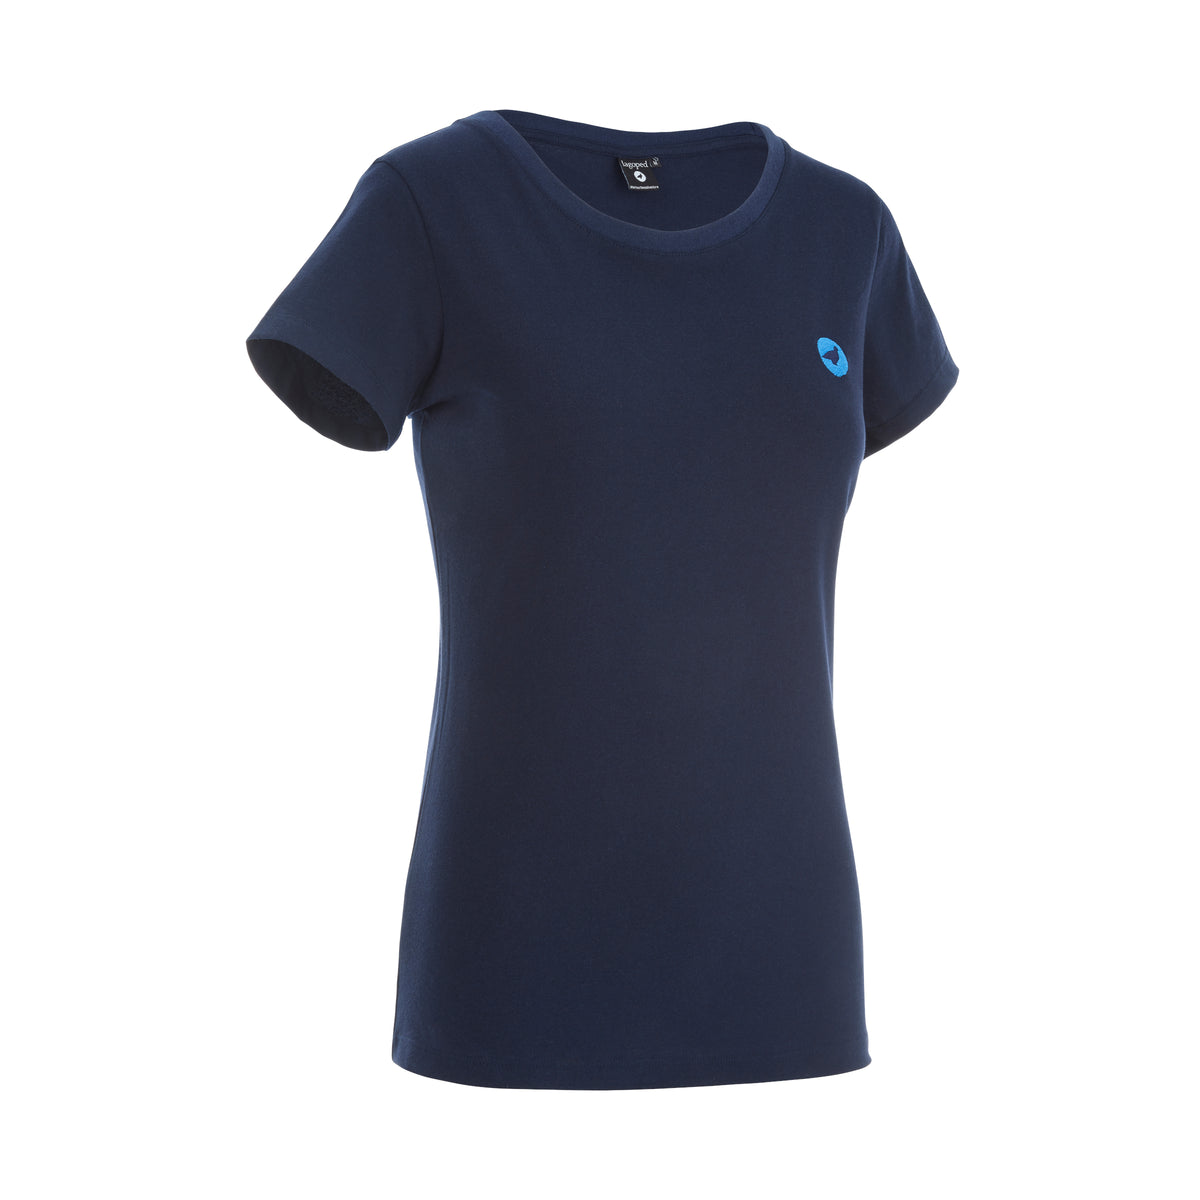 Lagoped Teerec - Camiseta - Mujer